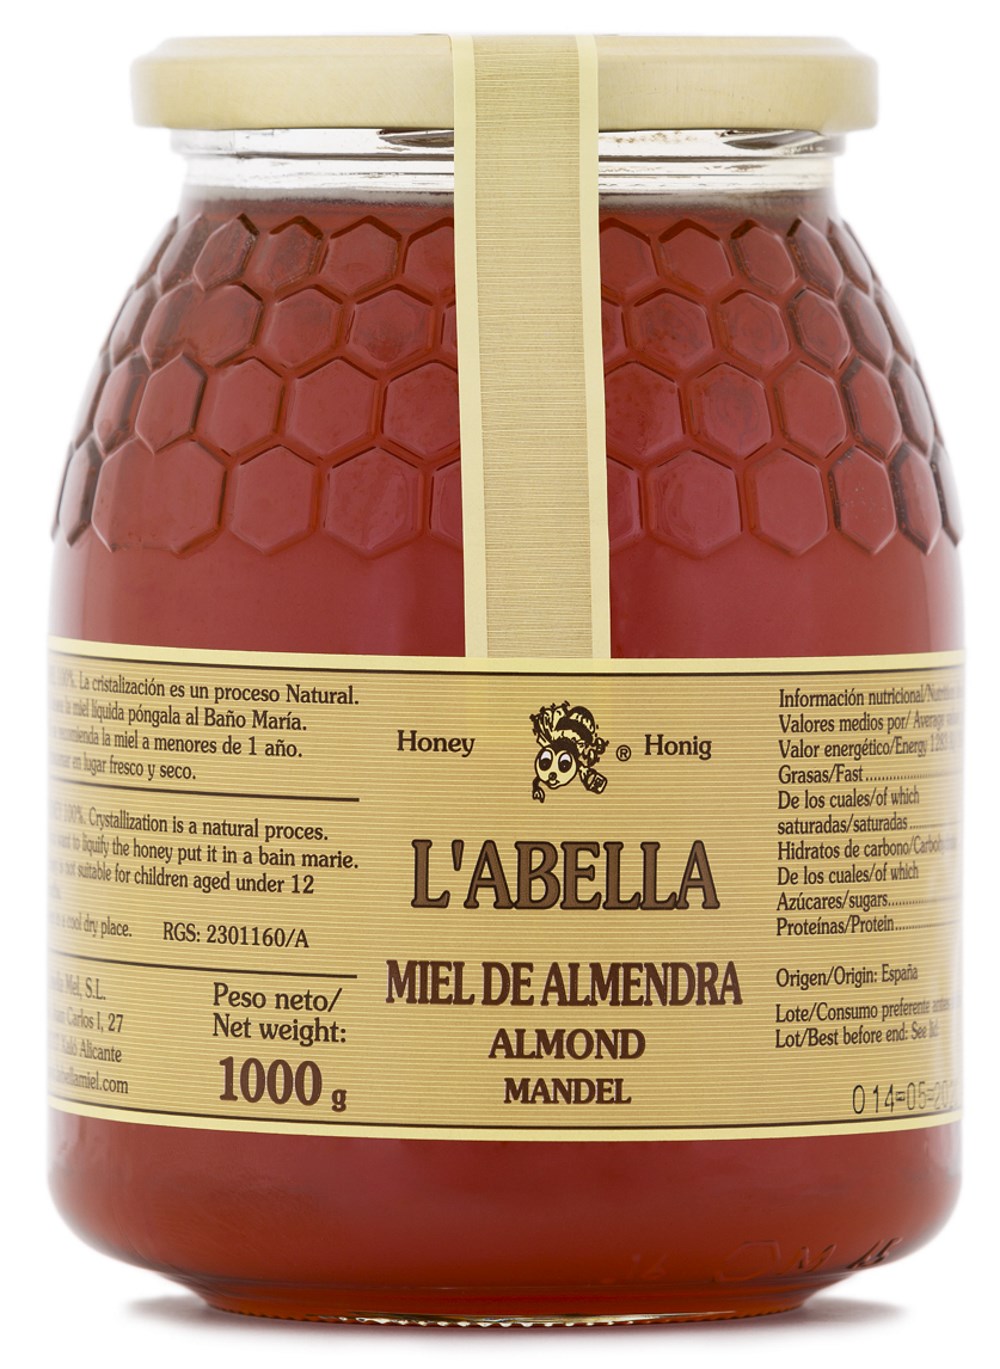 Mandelblütenhonig aus Spanien - Mandel Honig - Premium Qualität ...